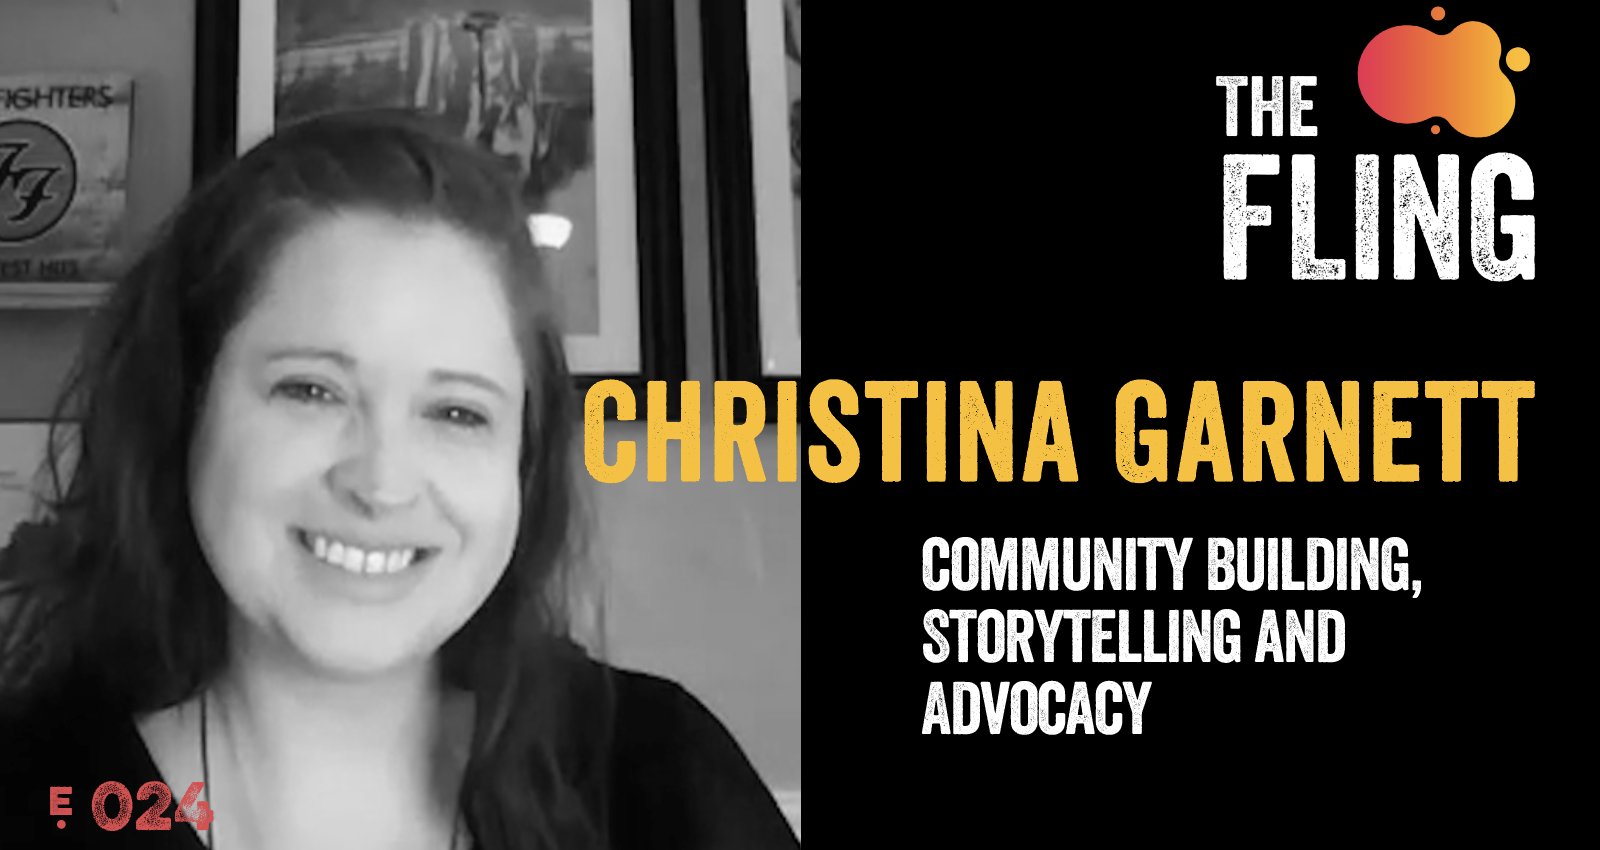 Christina Garnett on HubSpot, Community Building, Storytelling and Advocacy - The Fling Podcast